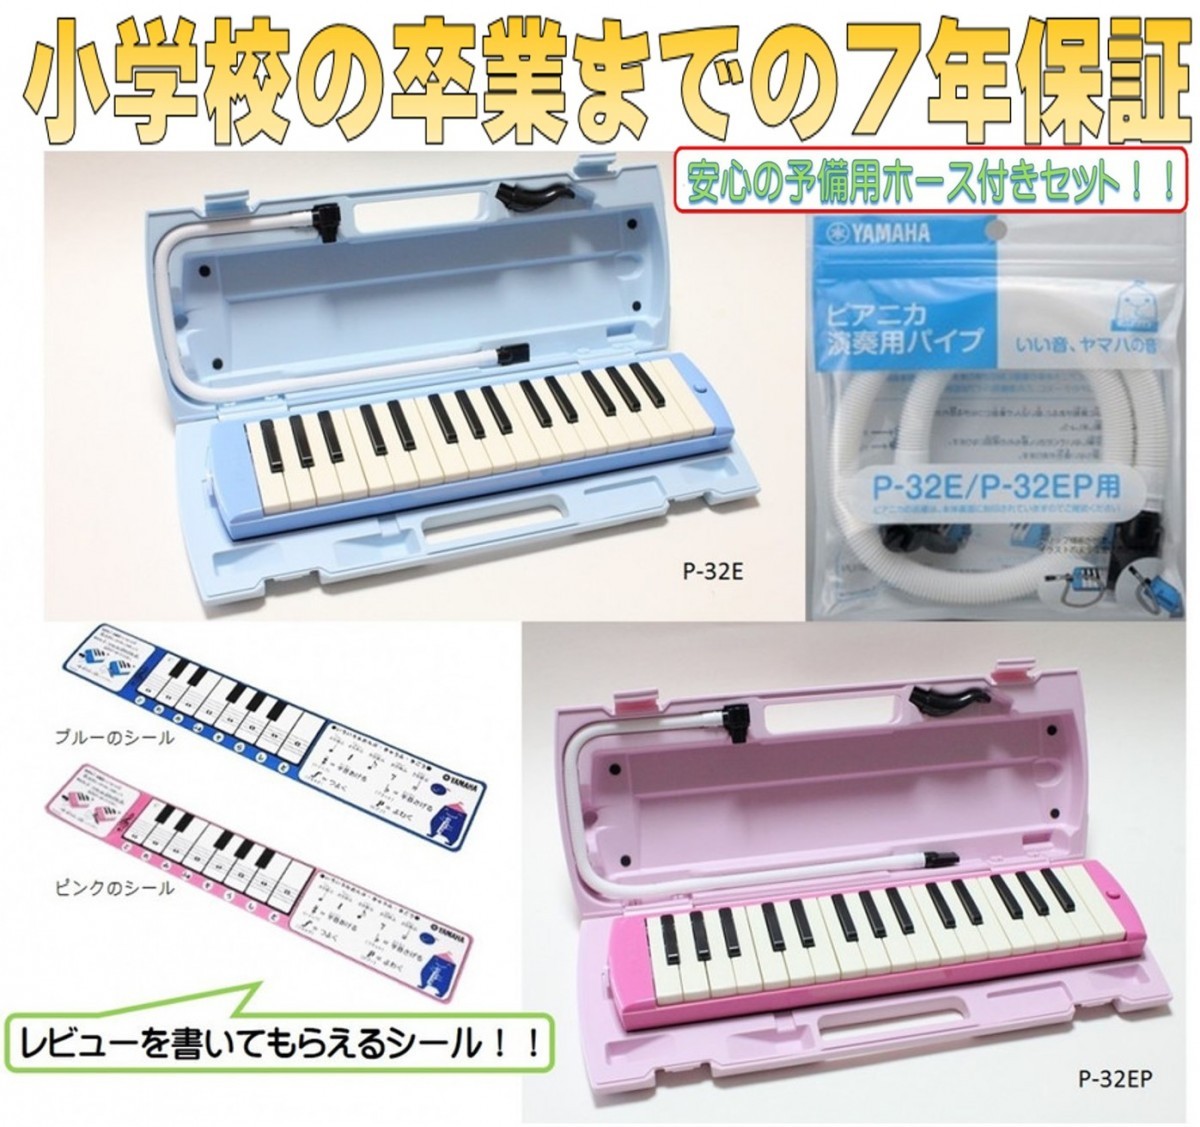  Yamaha YAMAHA melodica Piaa nika32 keyboard 7 years with guarantee P32E / P32EP profitable preliminary for hose set Revue . write keyboard seal present 